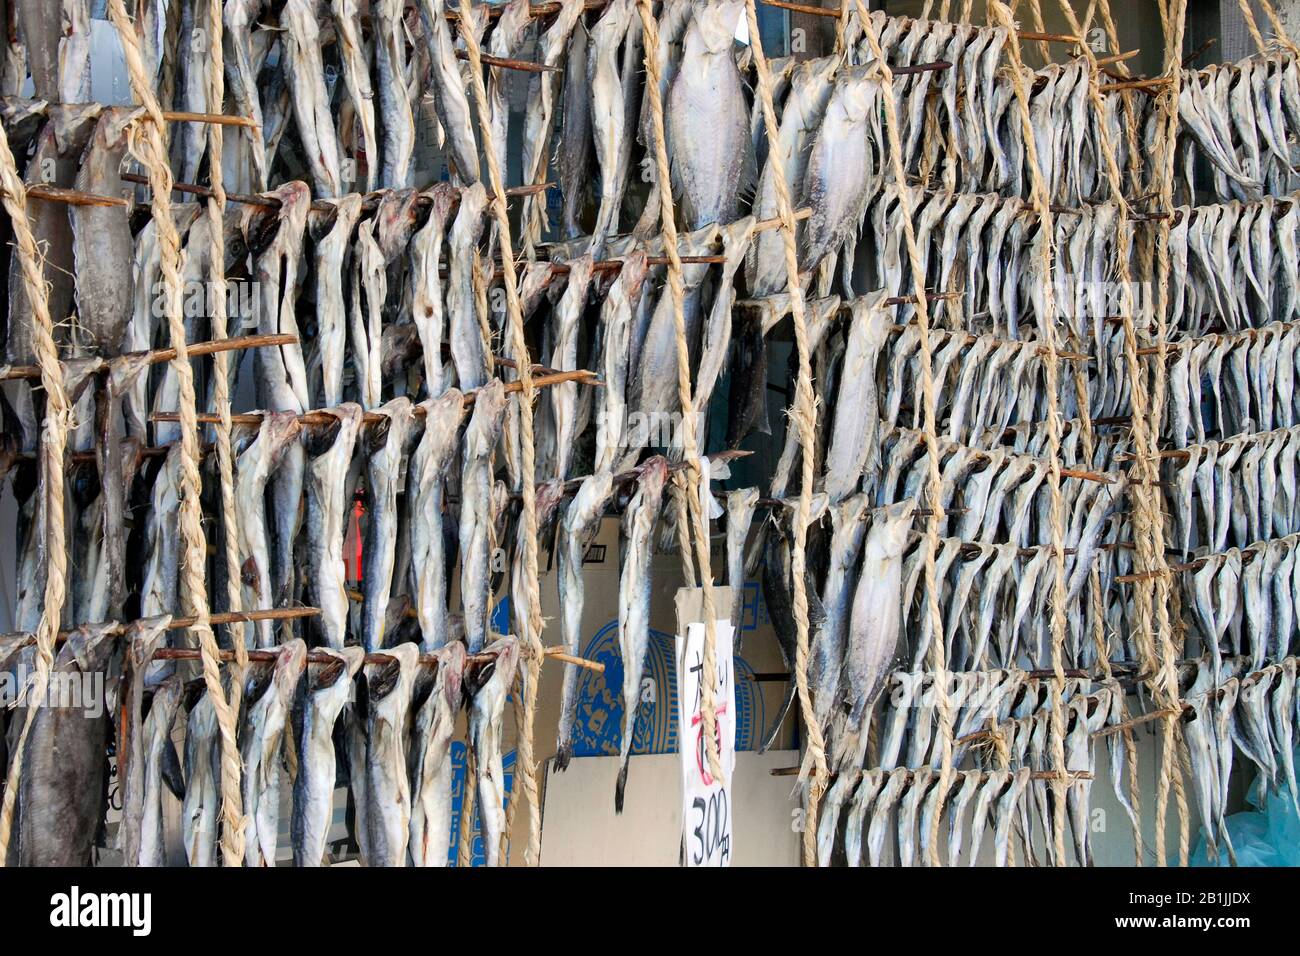 dried fish, Japan Stock Photo